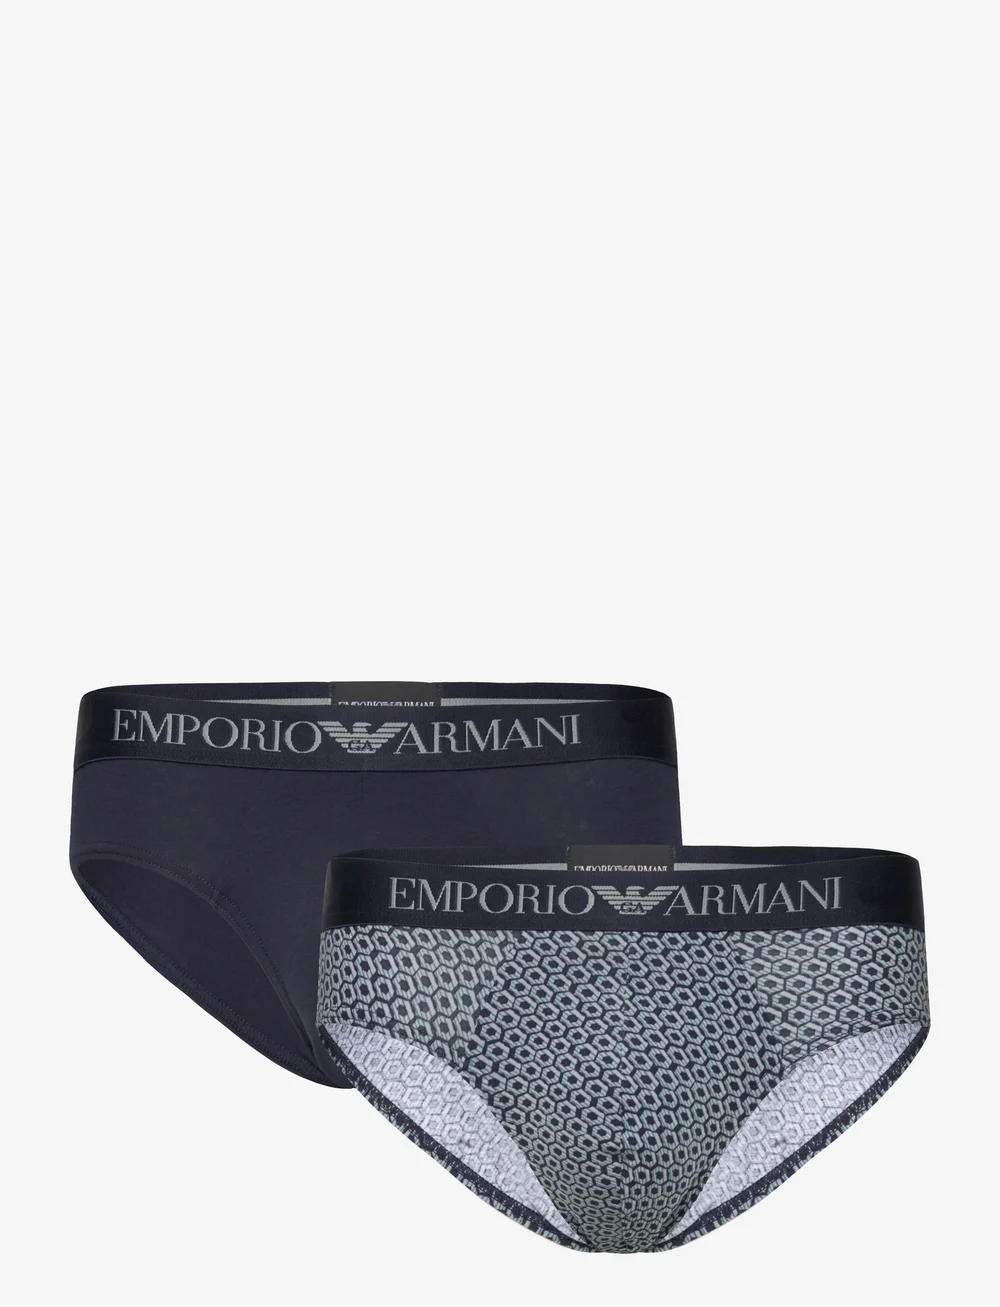 Emporio Armani Men's Knit 2-pack Brief - Briefs 